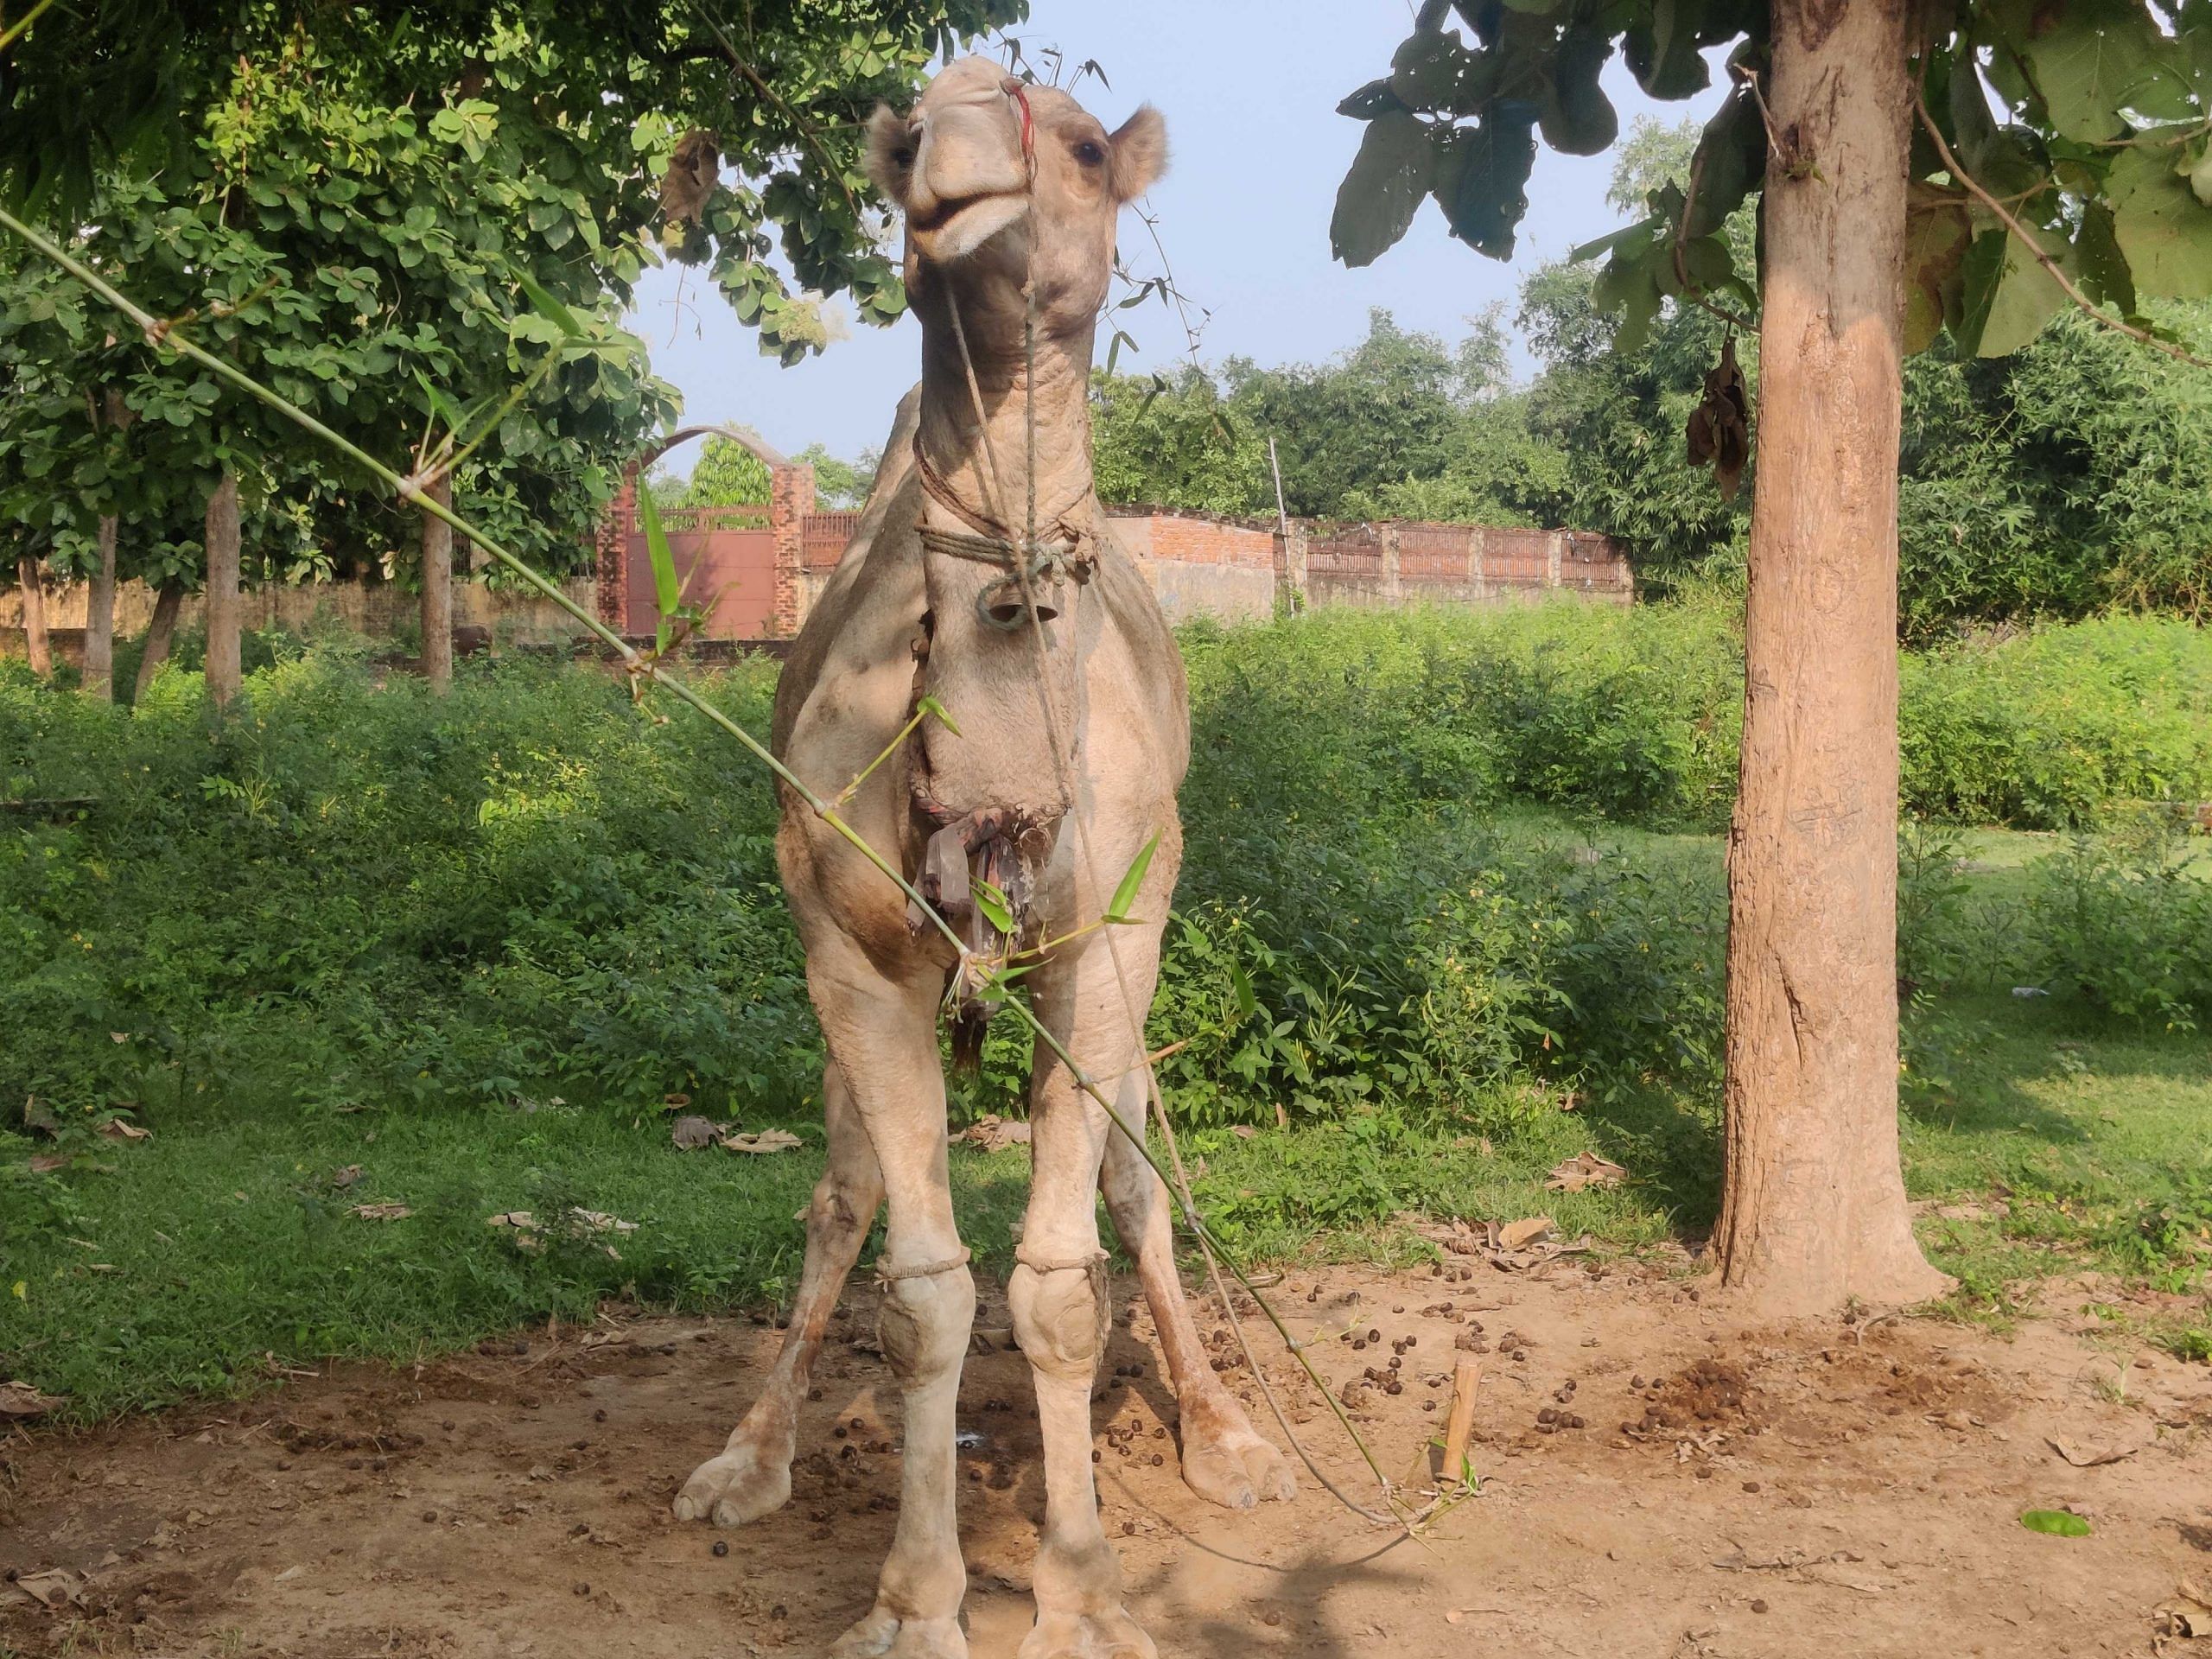 Katesar has over 80 camels | Shubhangi Misra, ThePrint